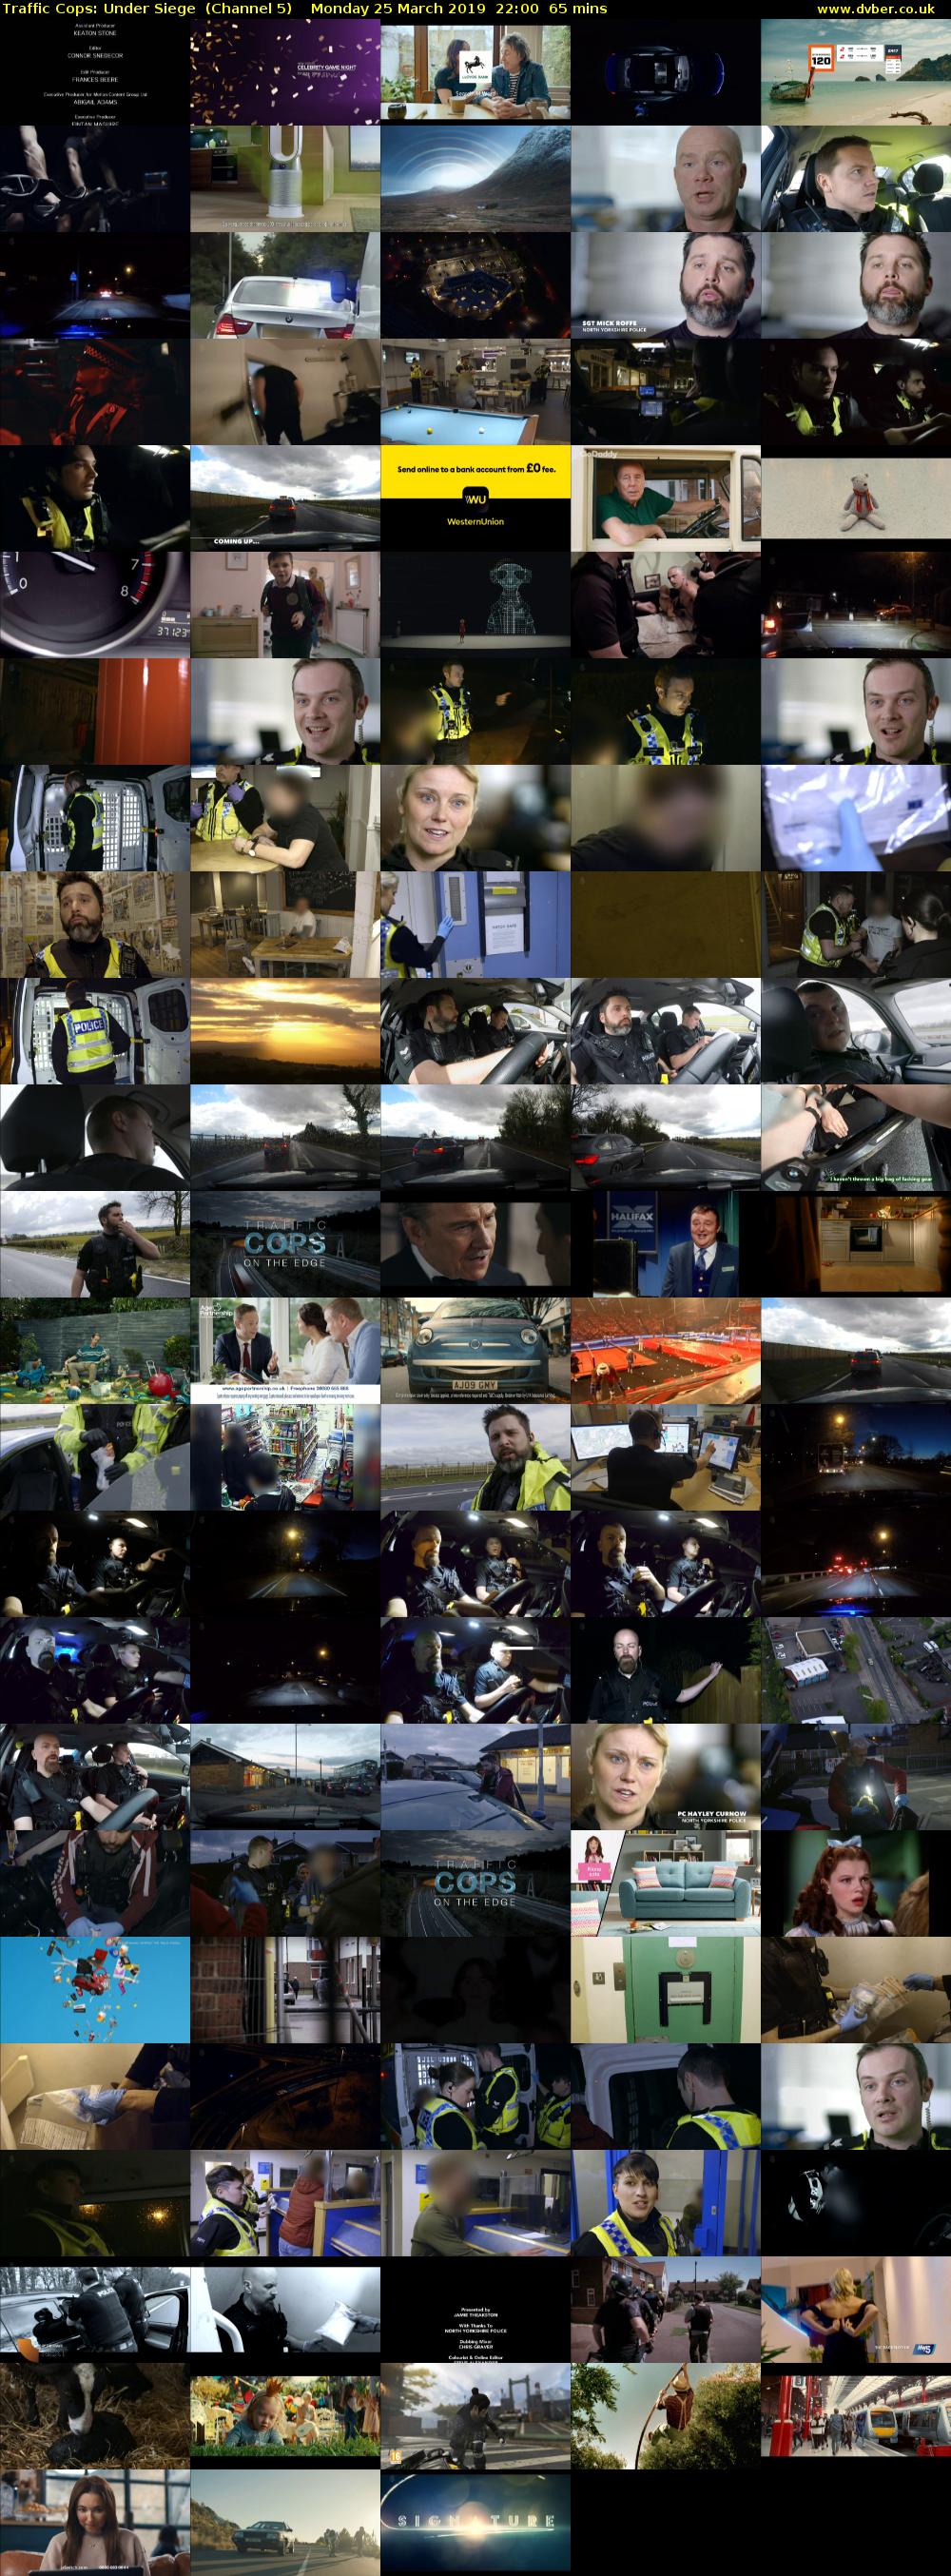 Traffic Cops: Under Siege  (Channel 5) Monday 25 March 2019 22:00 - 23:05